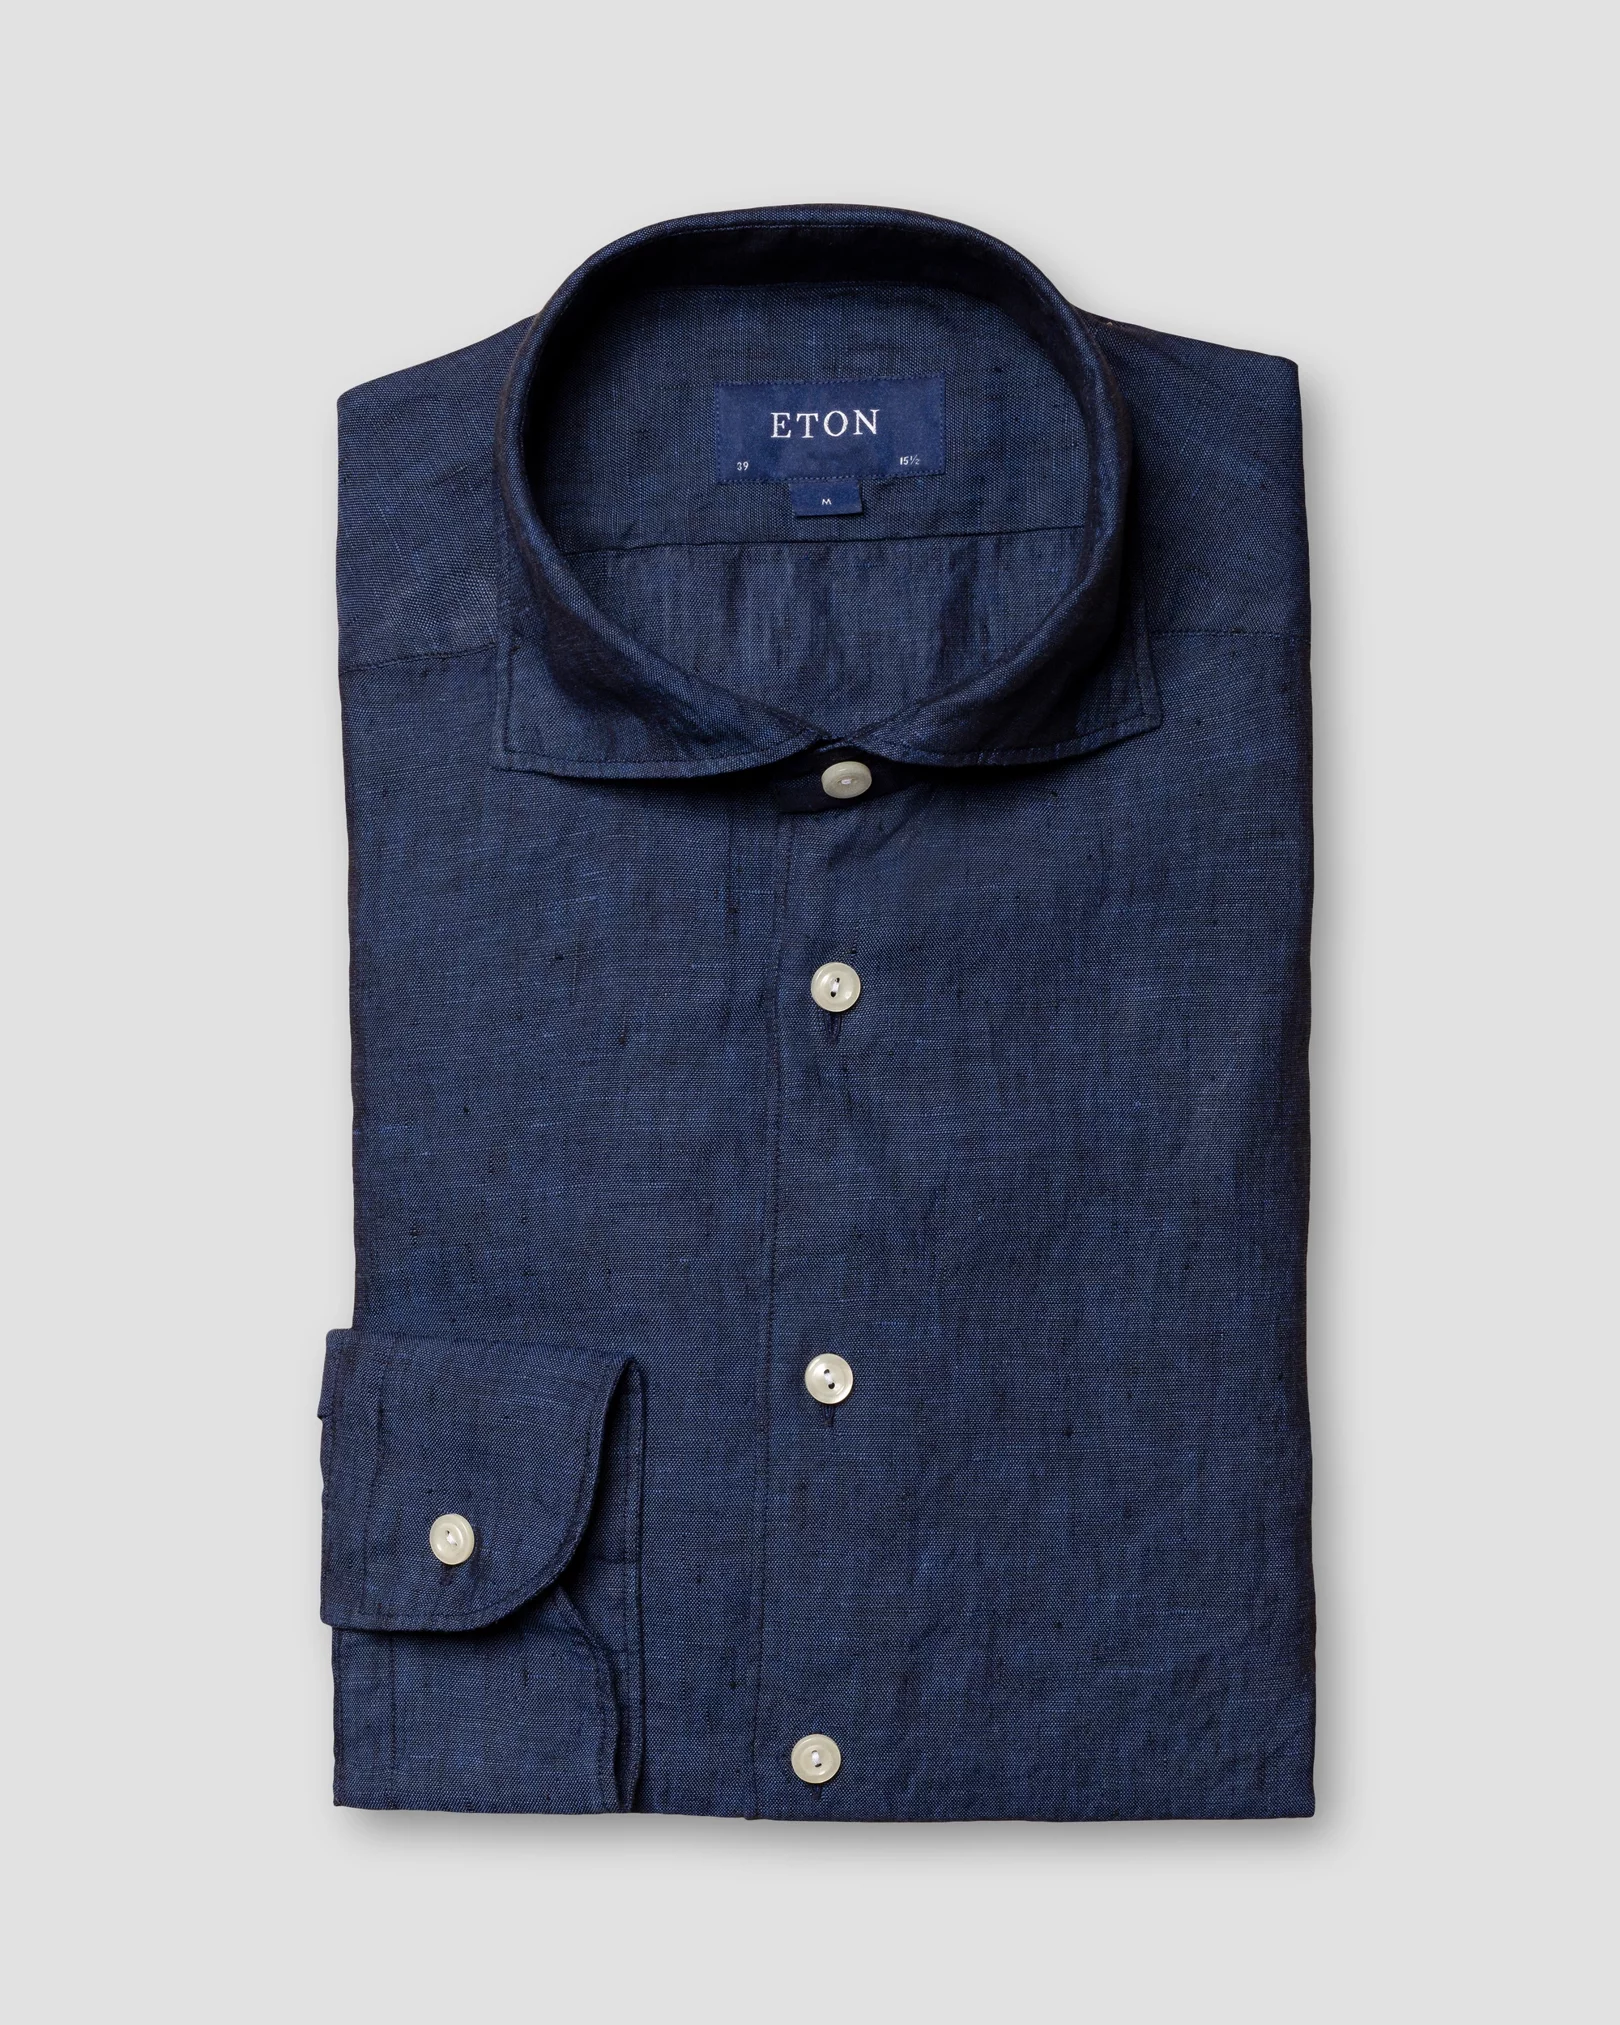 Eton - blue linen shirt wide spread